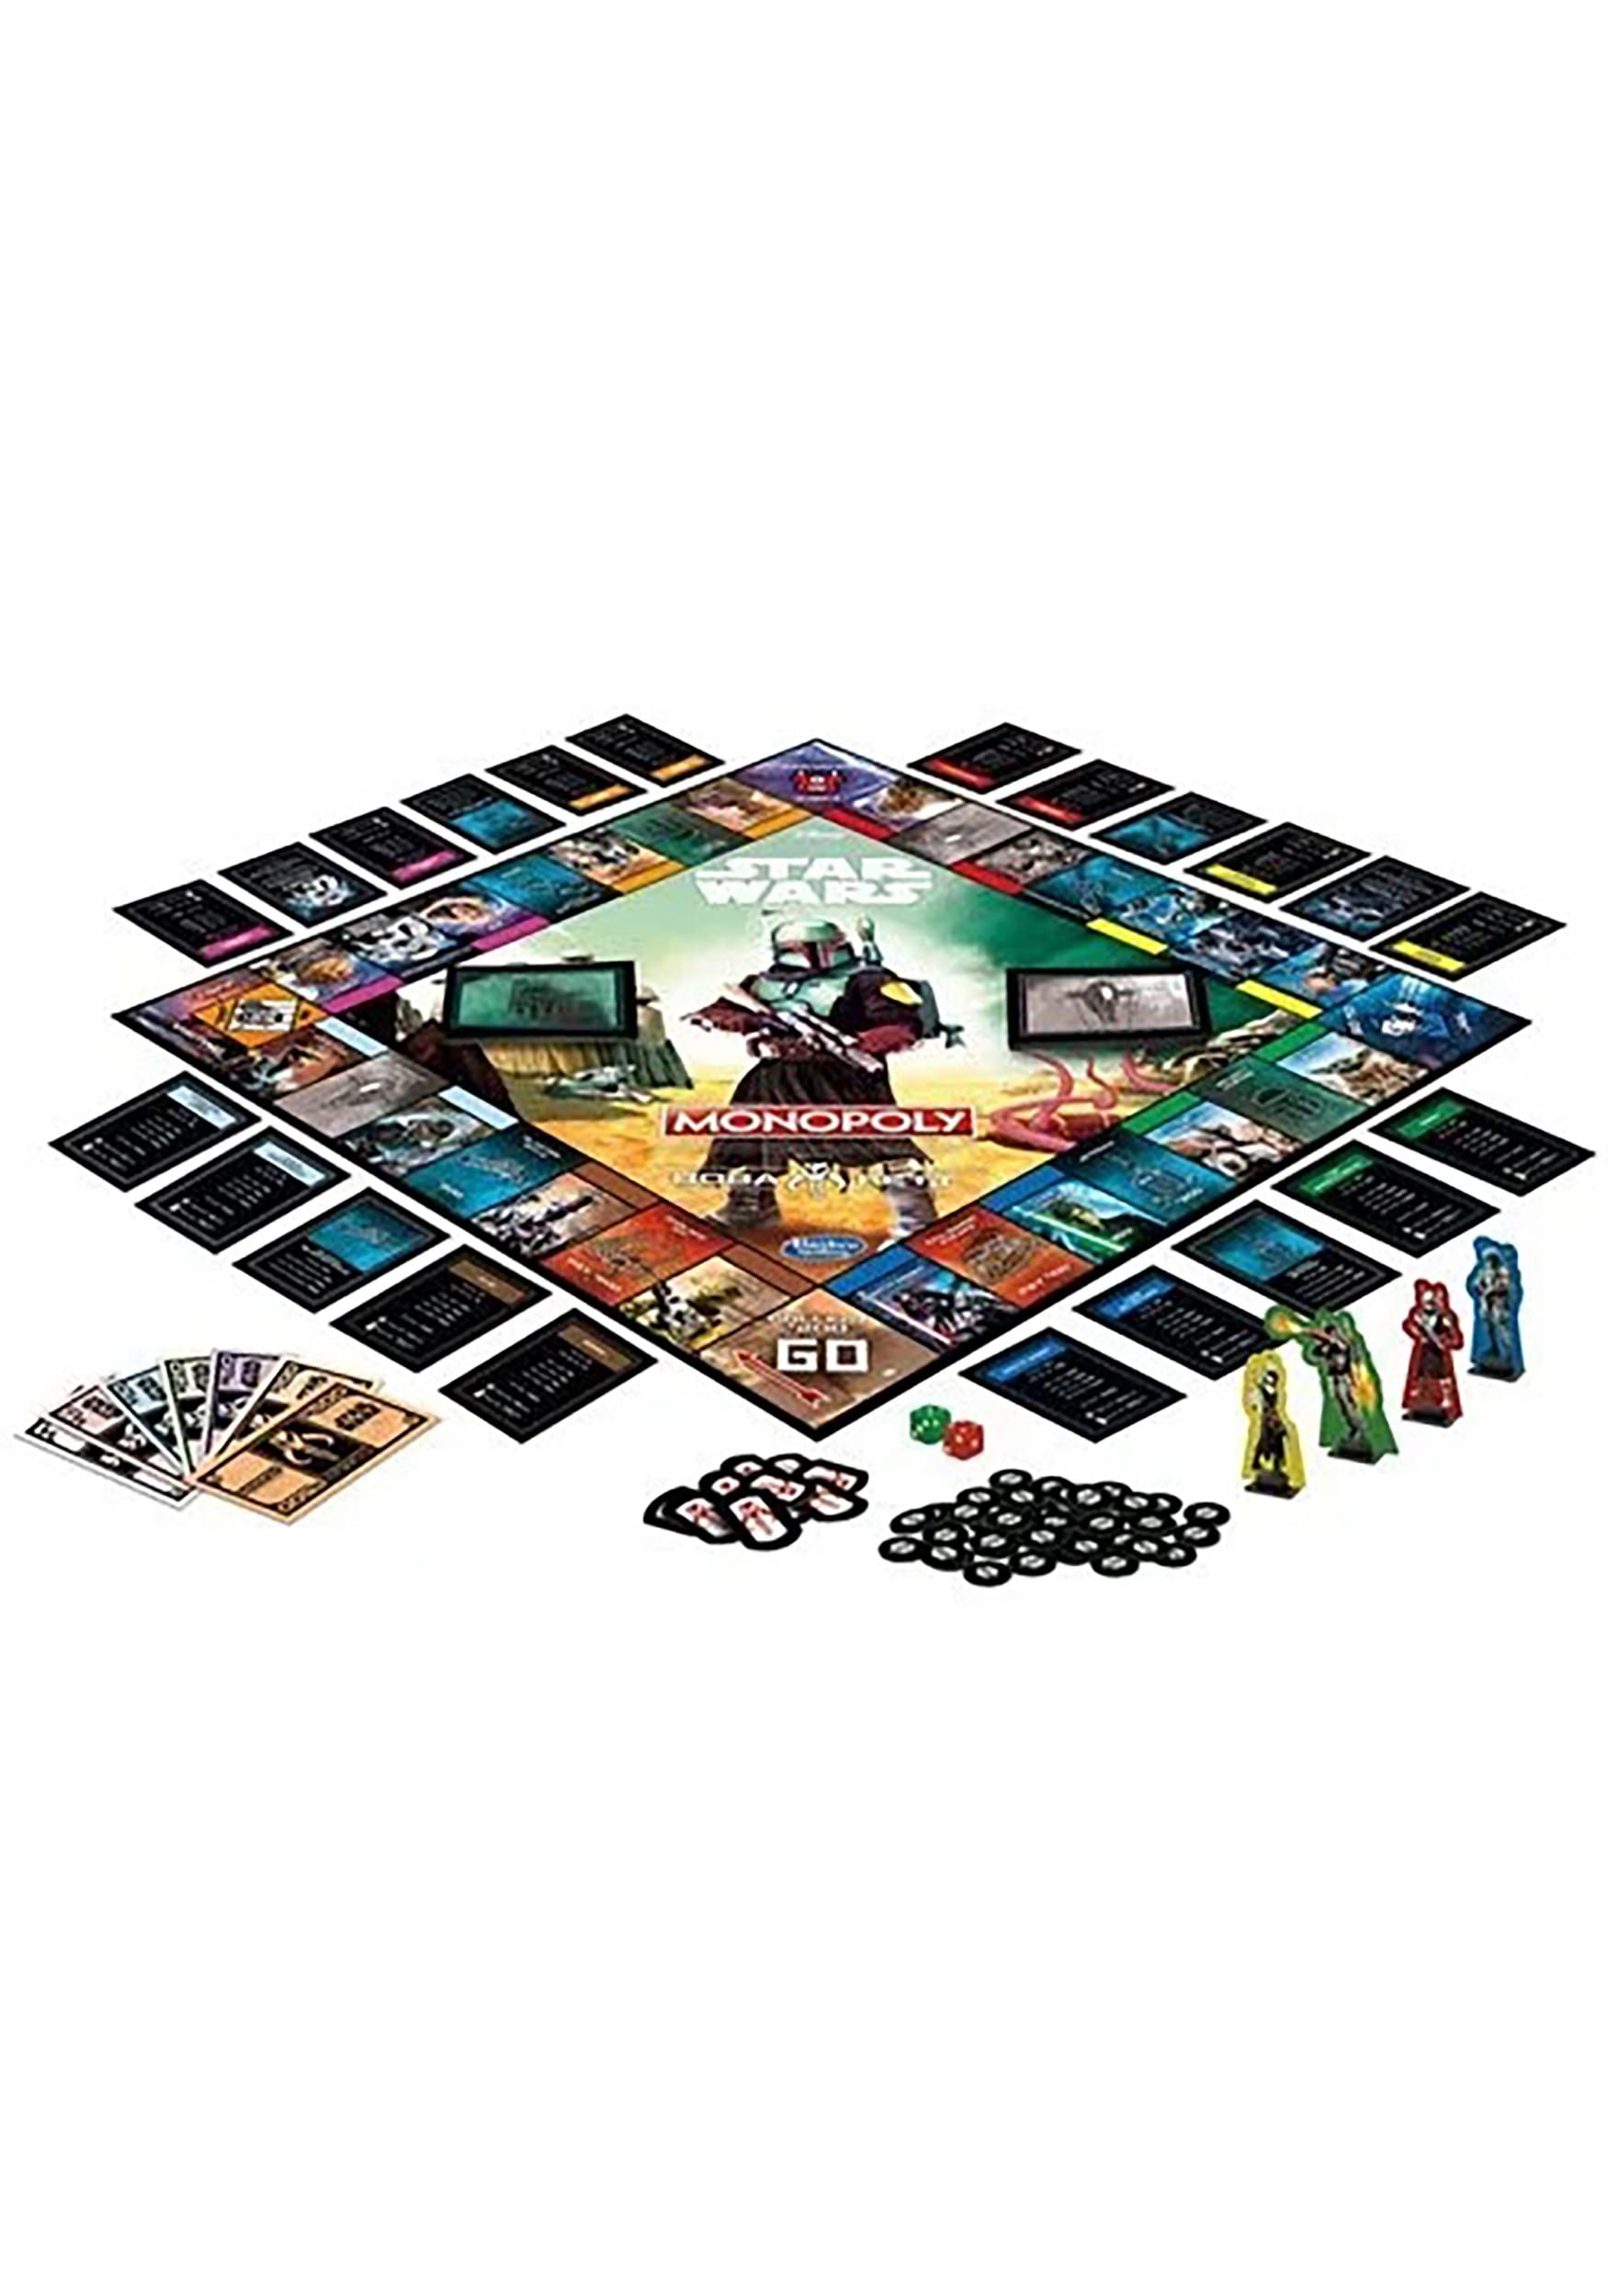 Star Wars Boba Fett Monopoly Edition Board Game